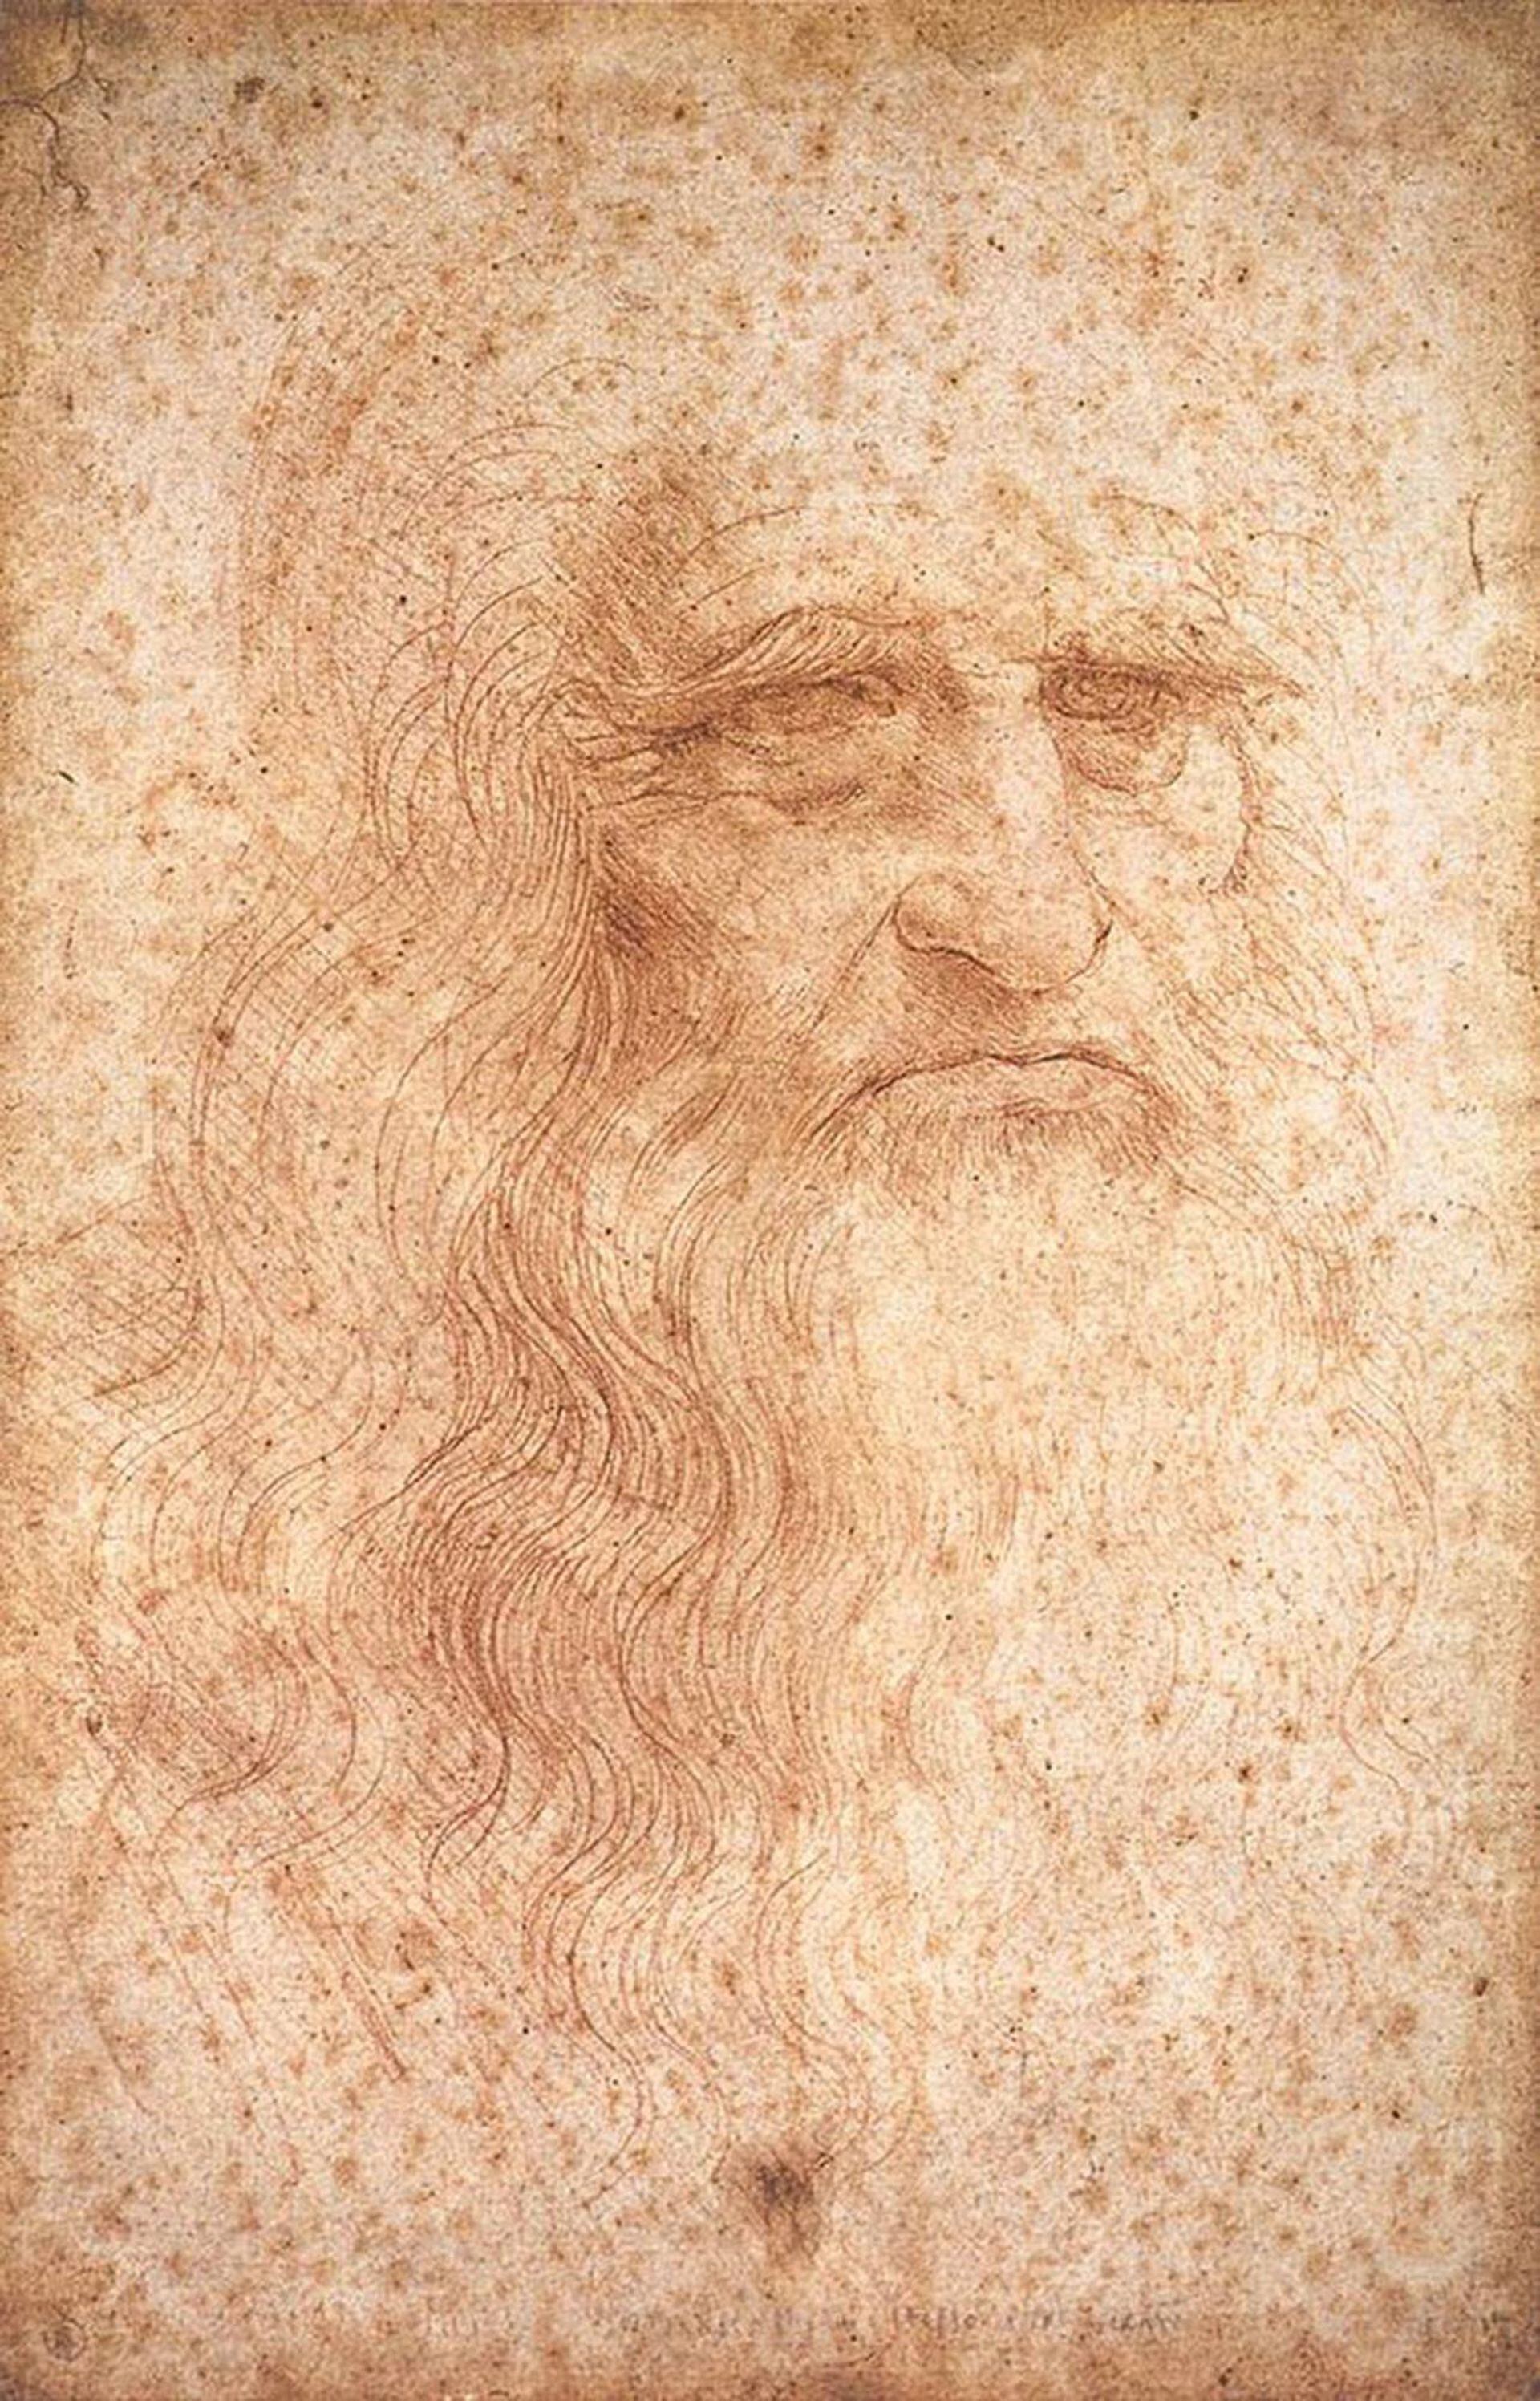 Autorretrato, atribuido a Leonardo da Vinci.